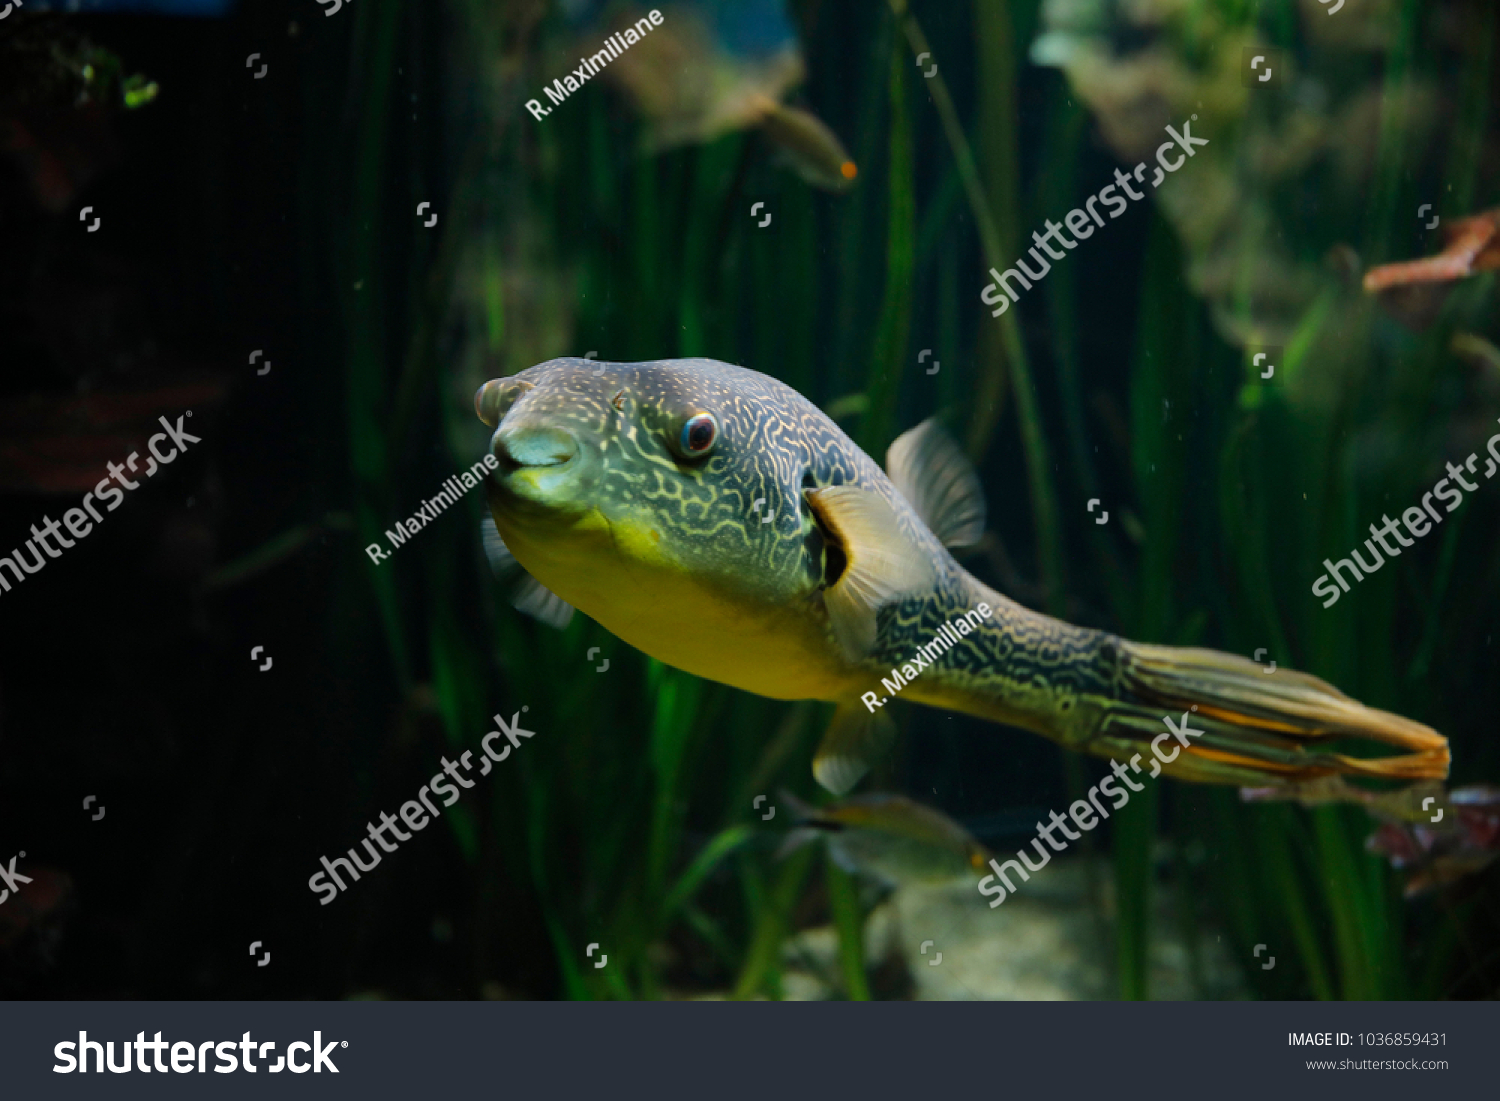 freshwater giant puffer